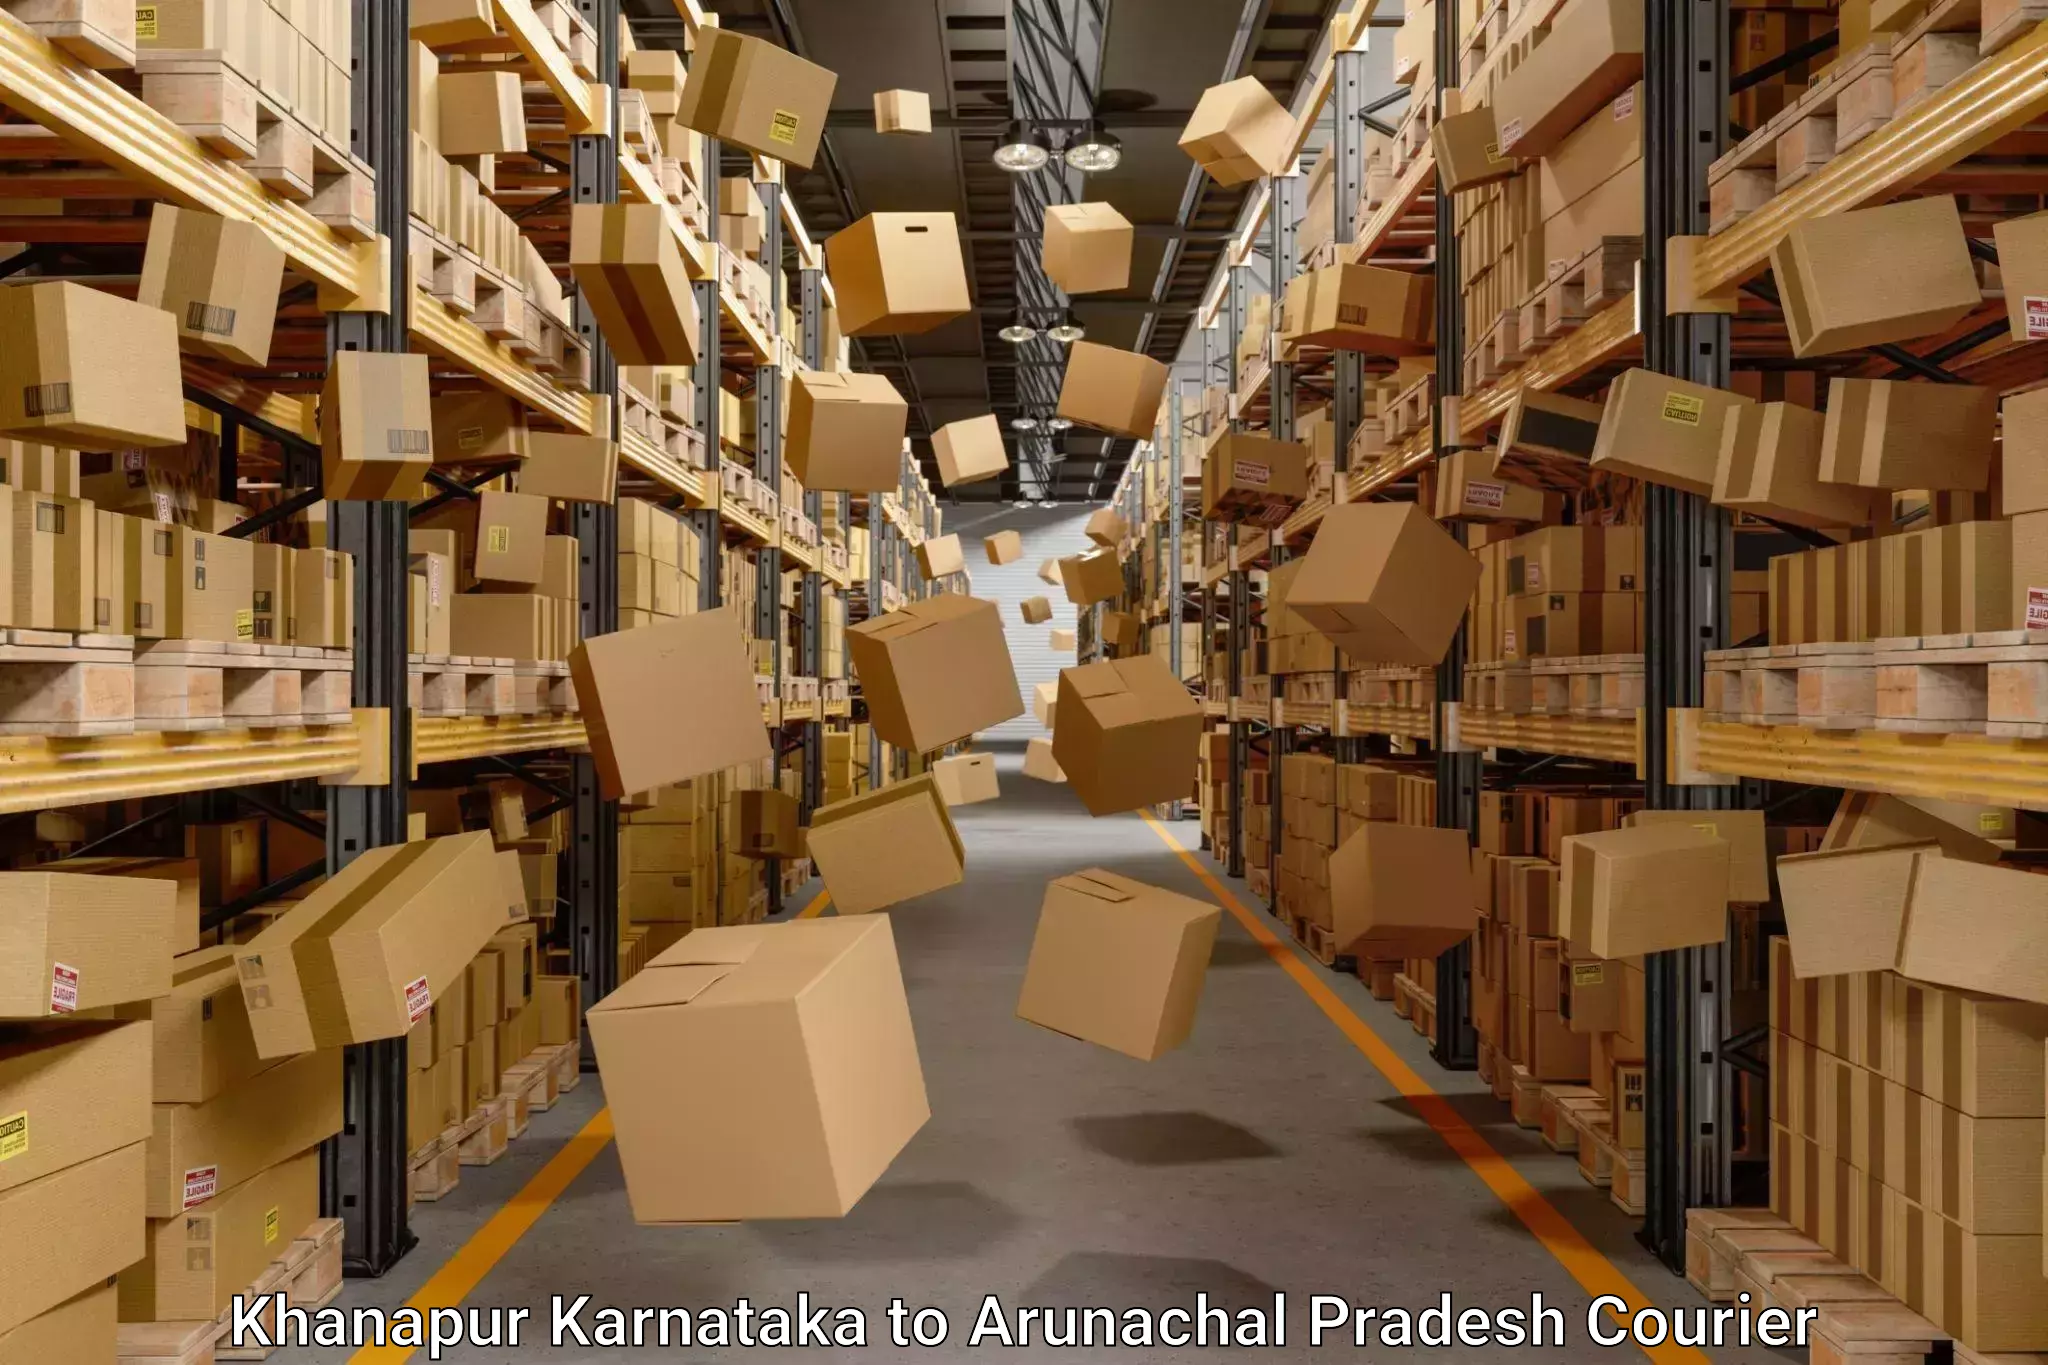 Professional moving company Khanapur Karnataka to Likabali